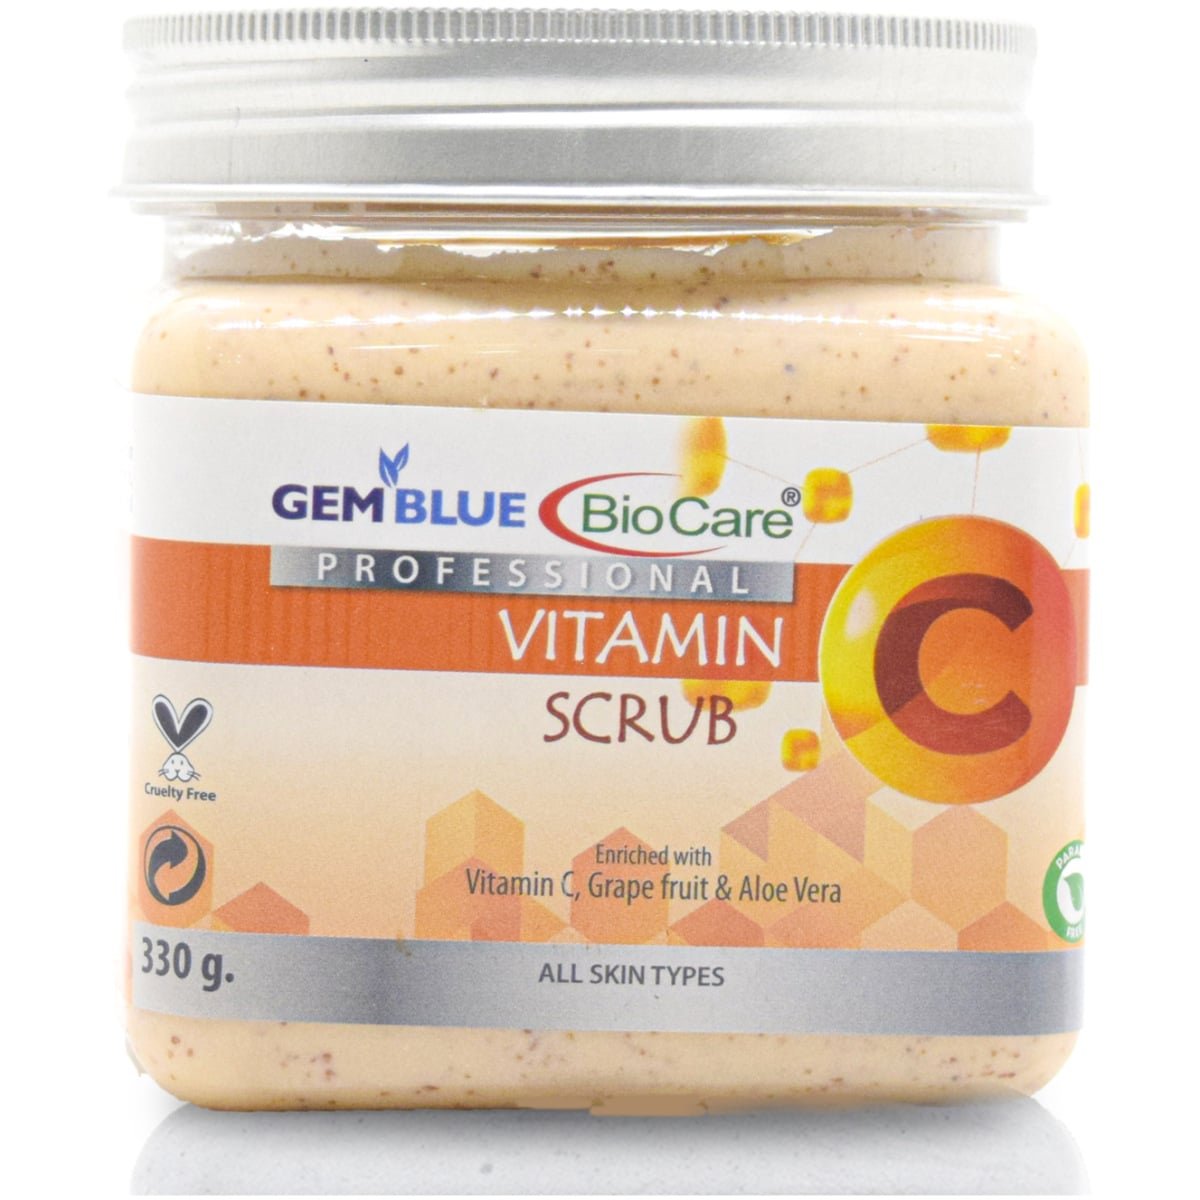 Gemblue Biocare Professional Vitamin Scrub 330ml